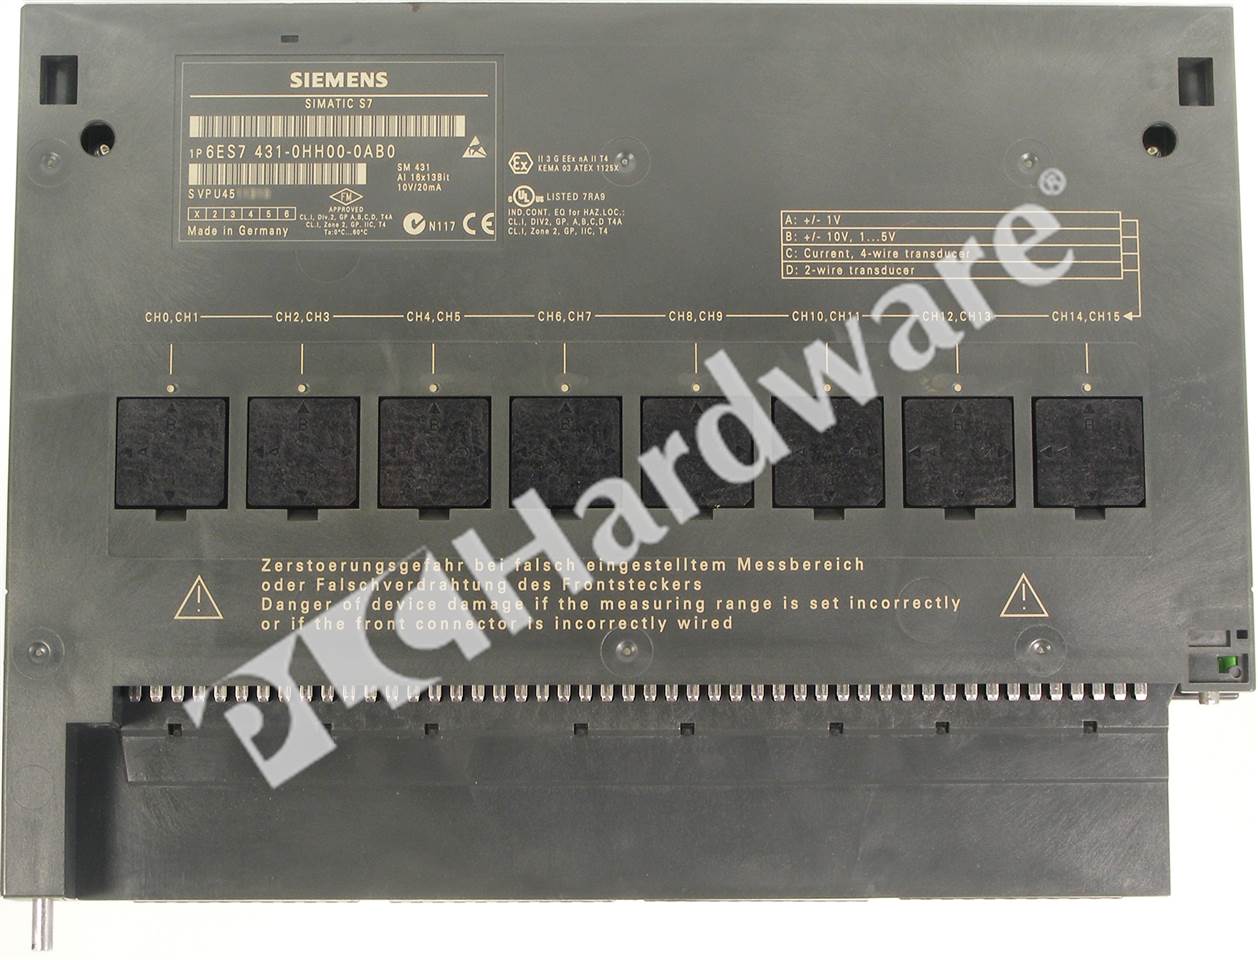 PLC Hardware: Siemens 6ES7431-0HH00-0AB0 SIMATIC S7-400 SM 431